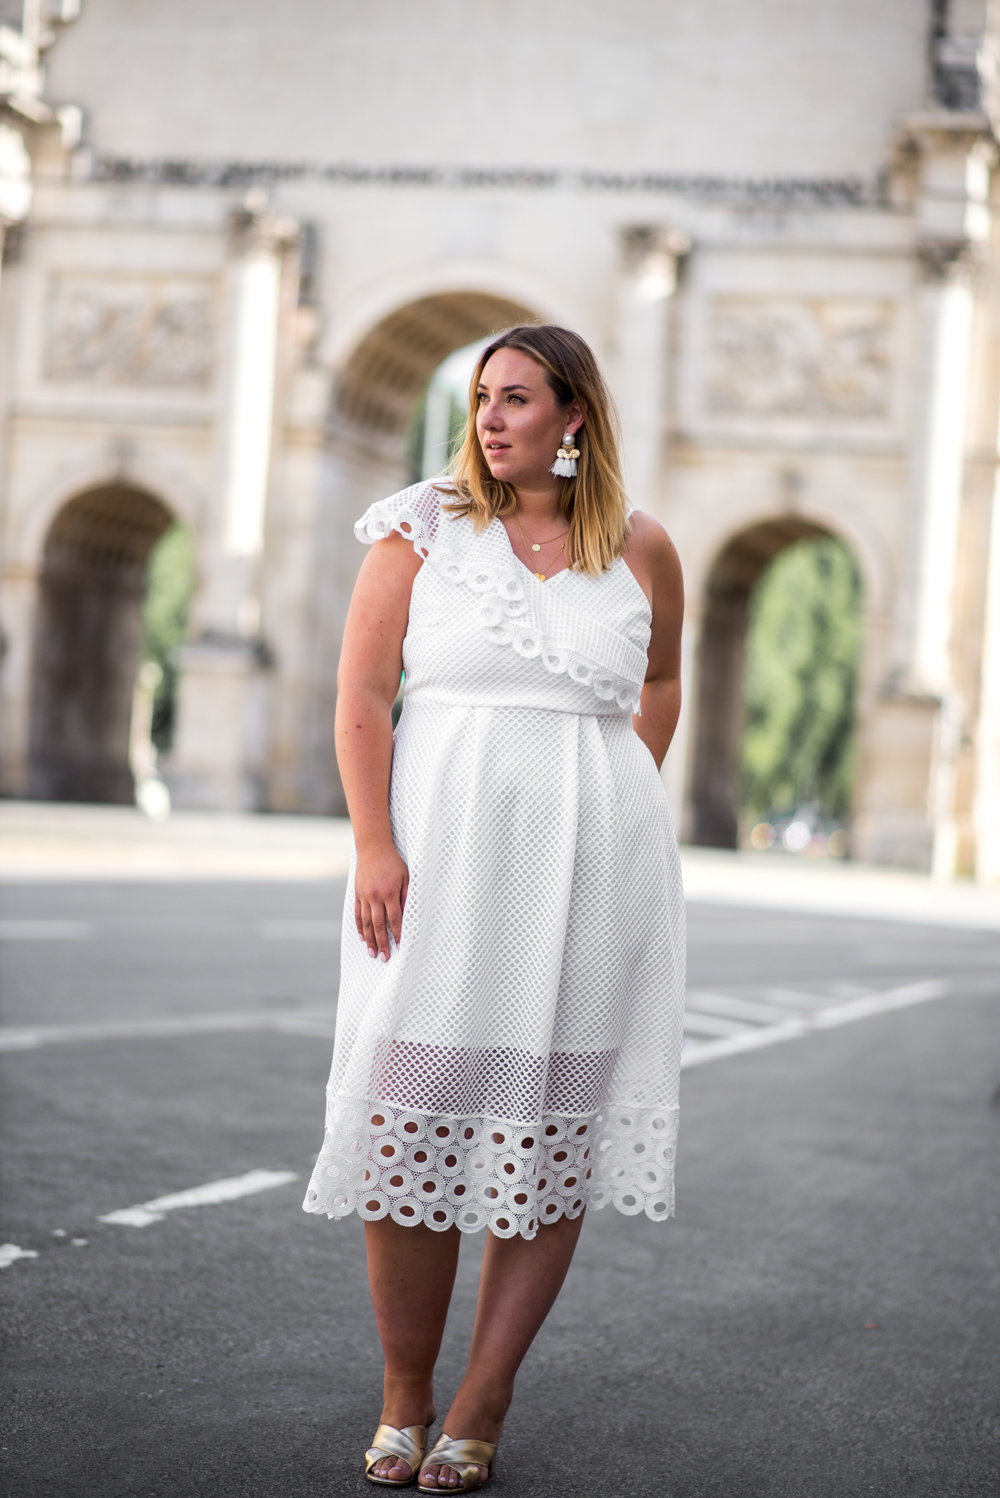 Soulfully_White Dress_Plus Size_Blogger_Next_Plus size Deutschland (2 von 8)